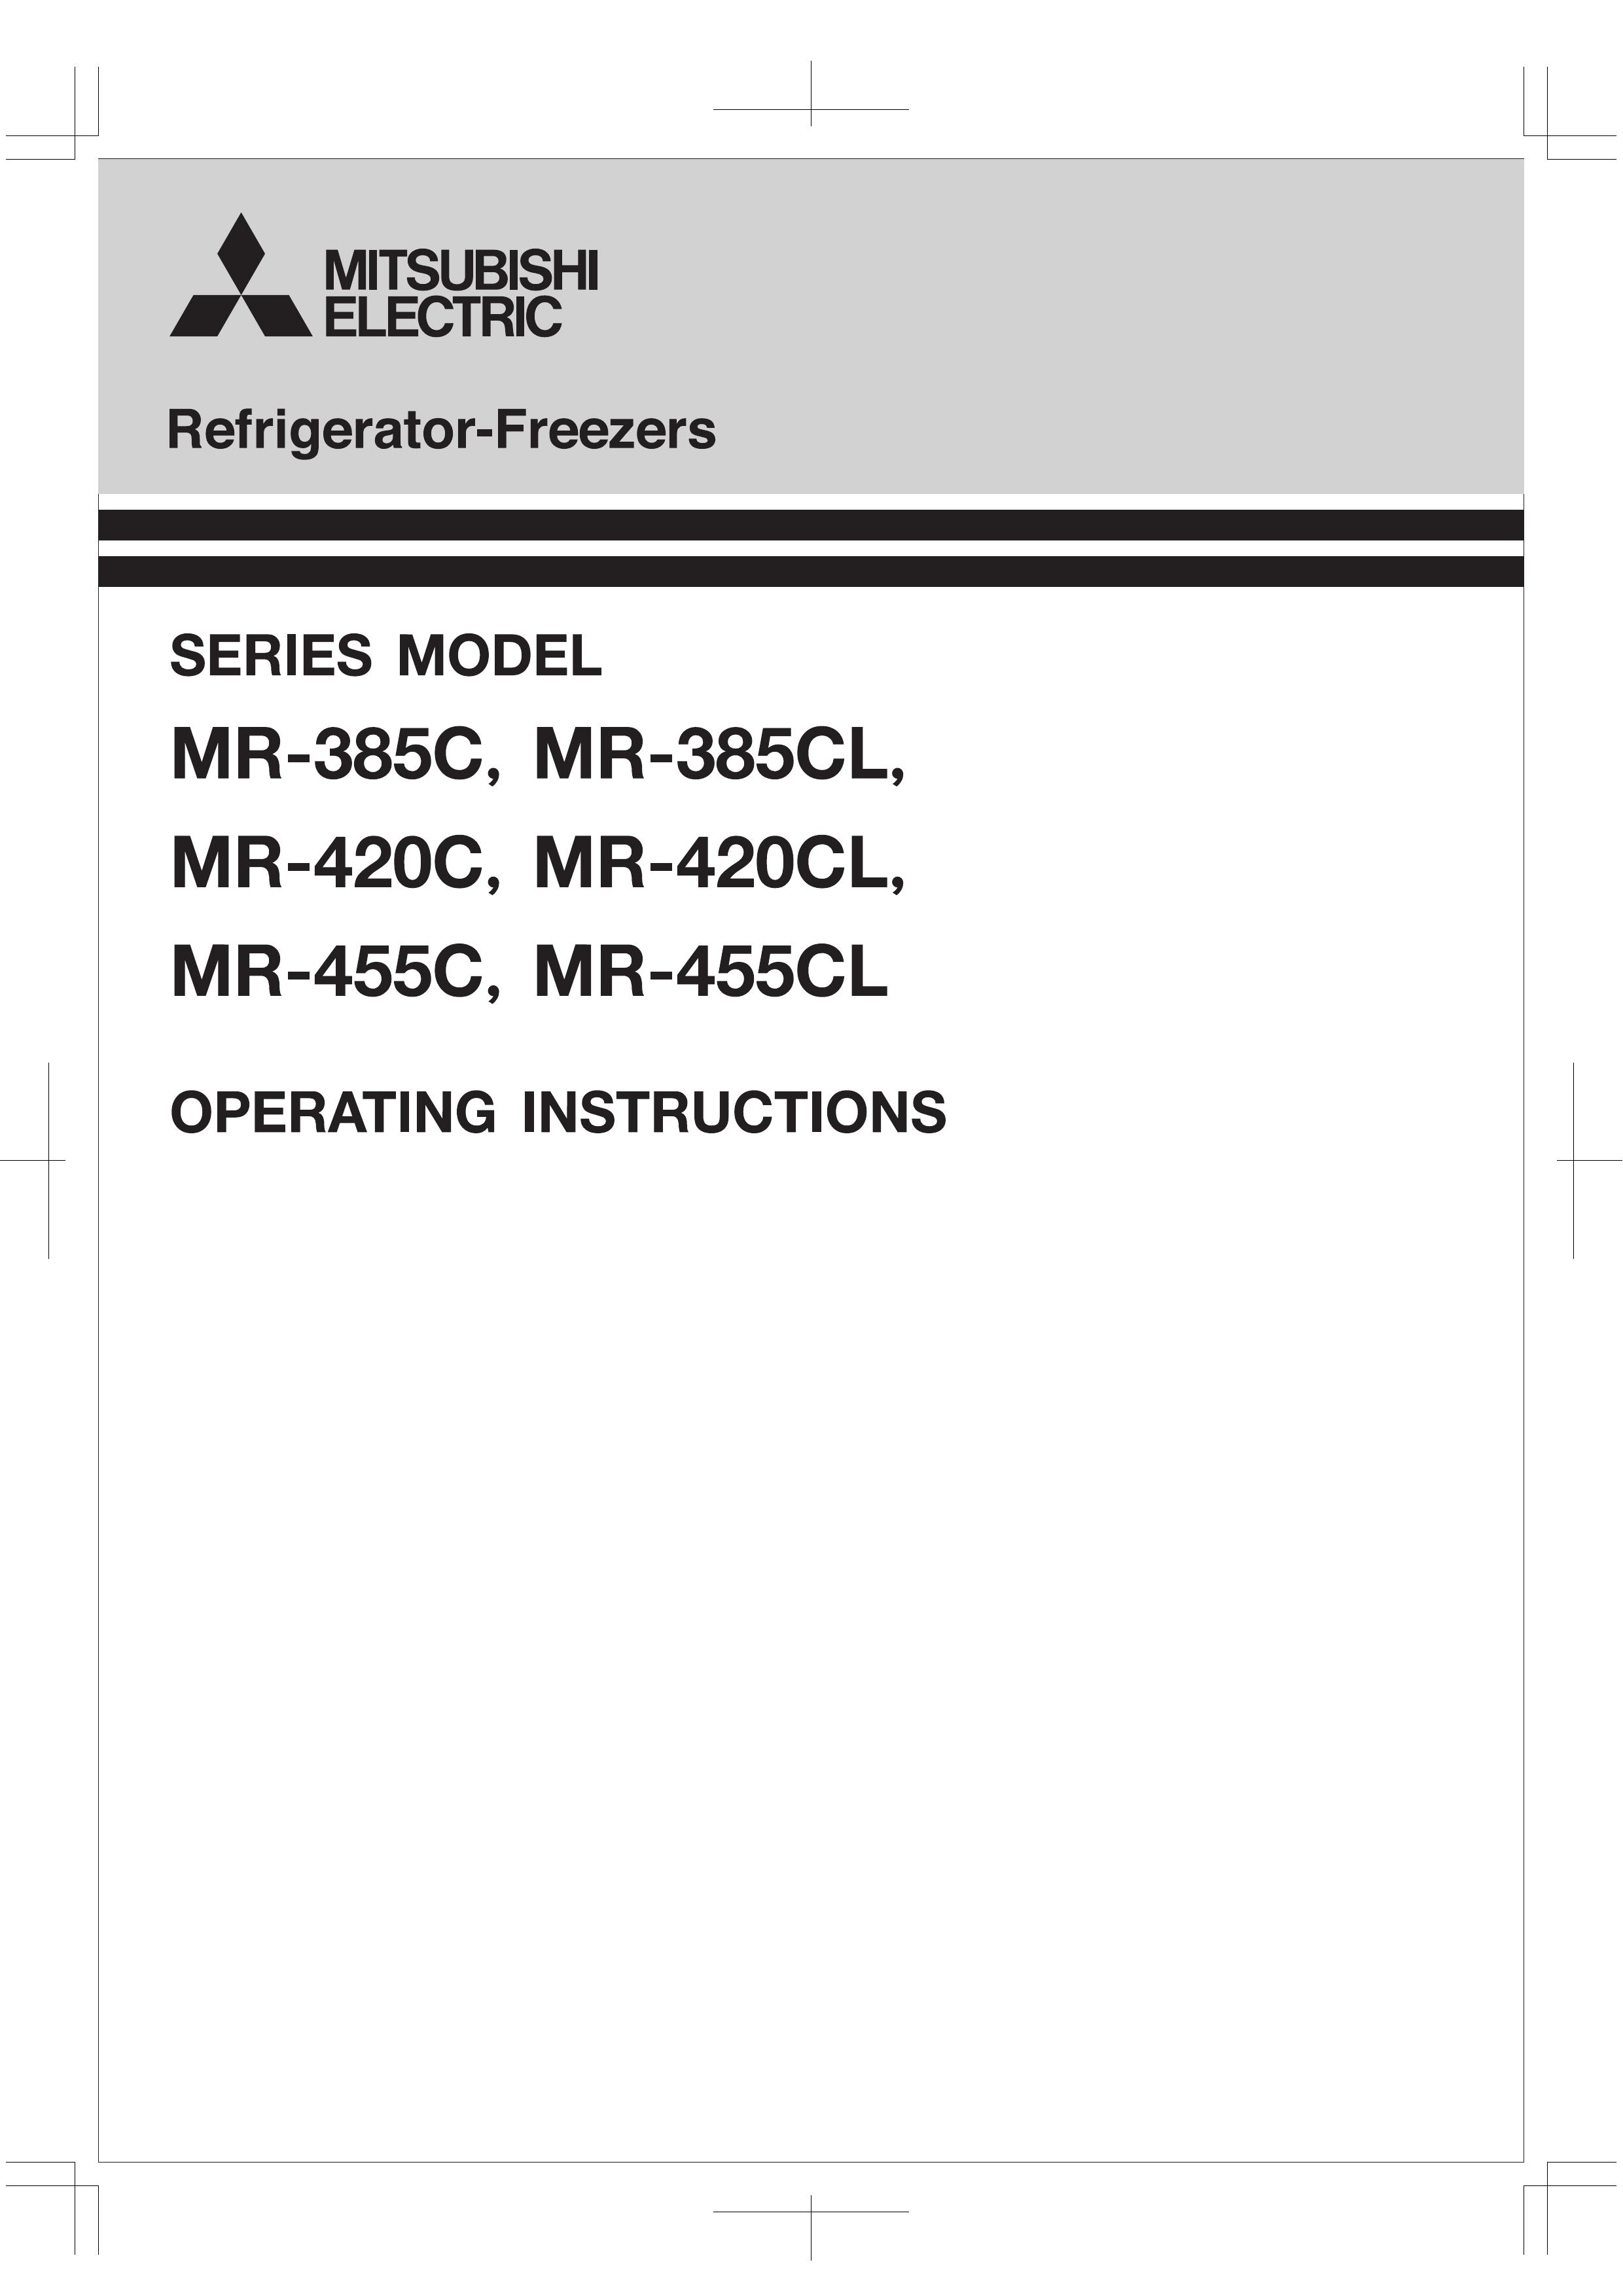 Mitsubishi Electronics MR-455CL Refrigerator User Manual